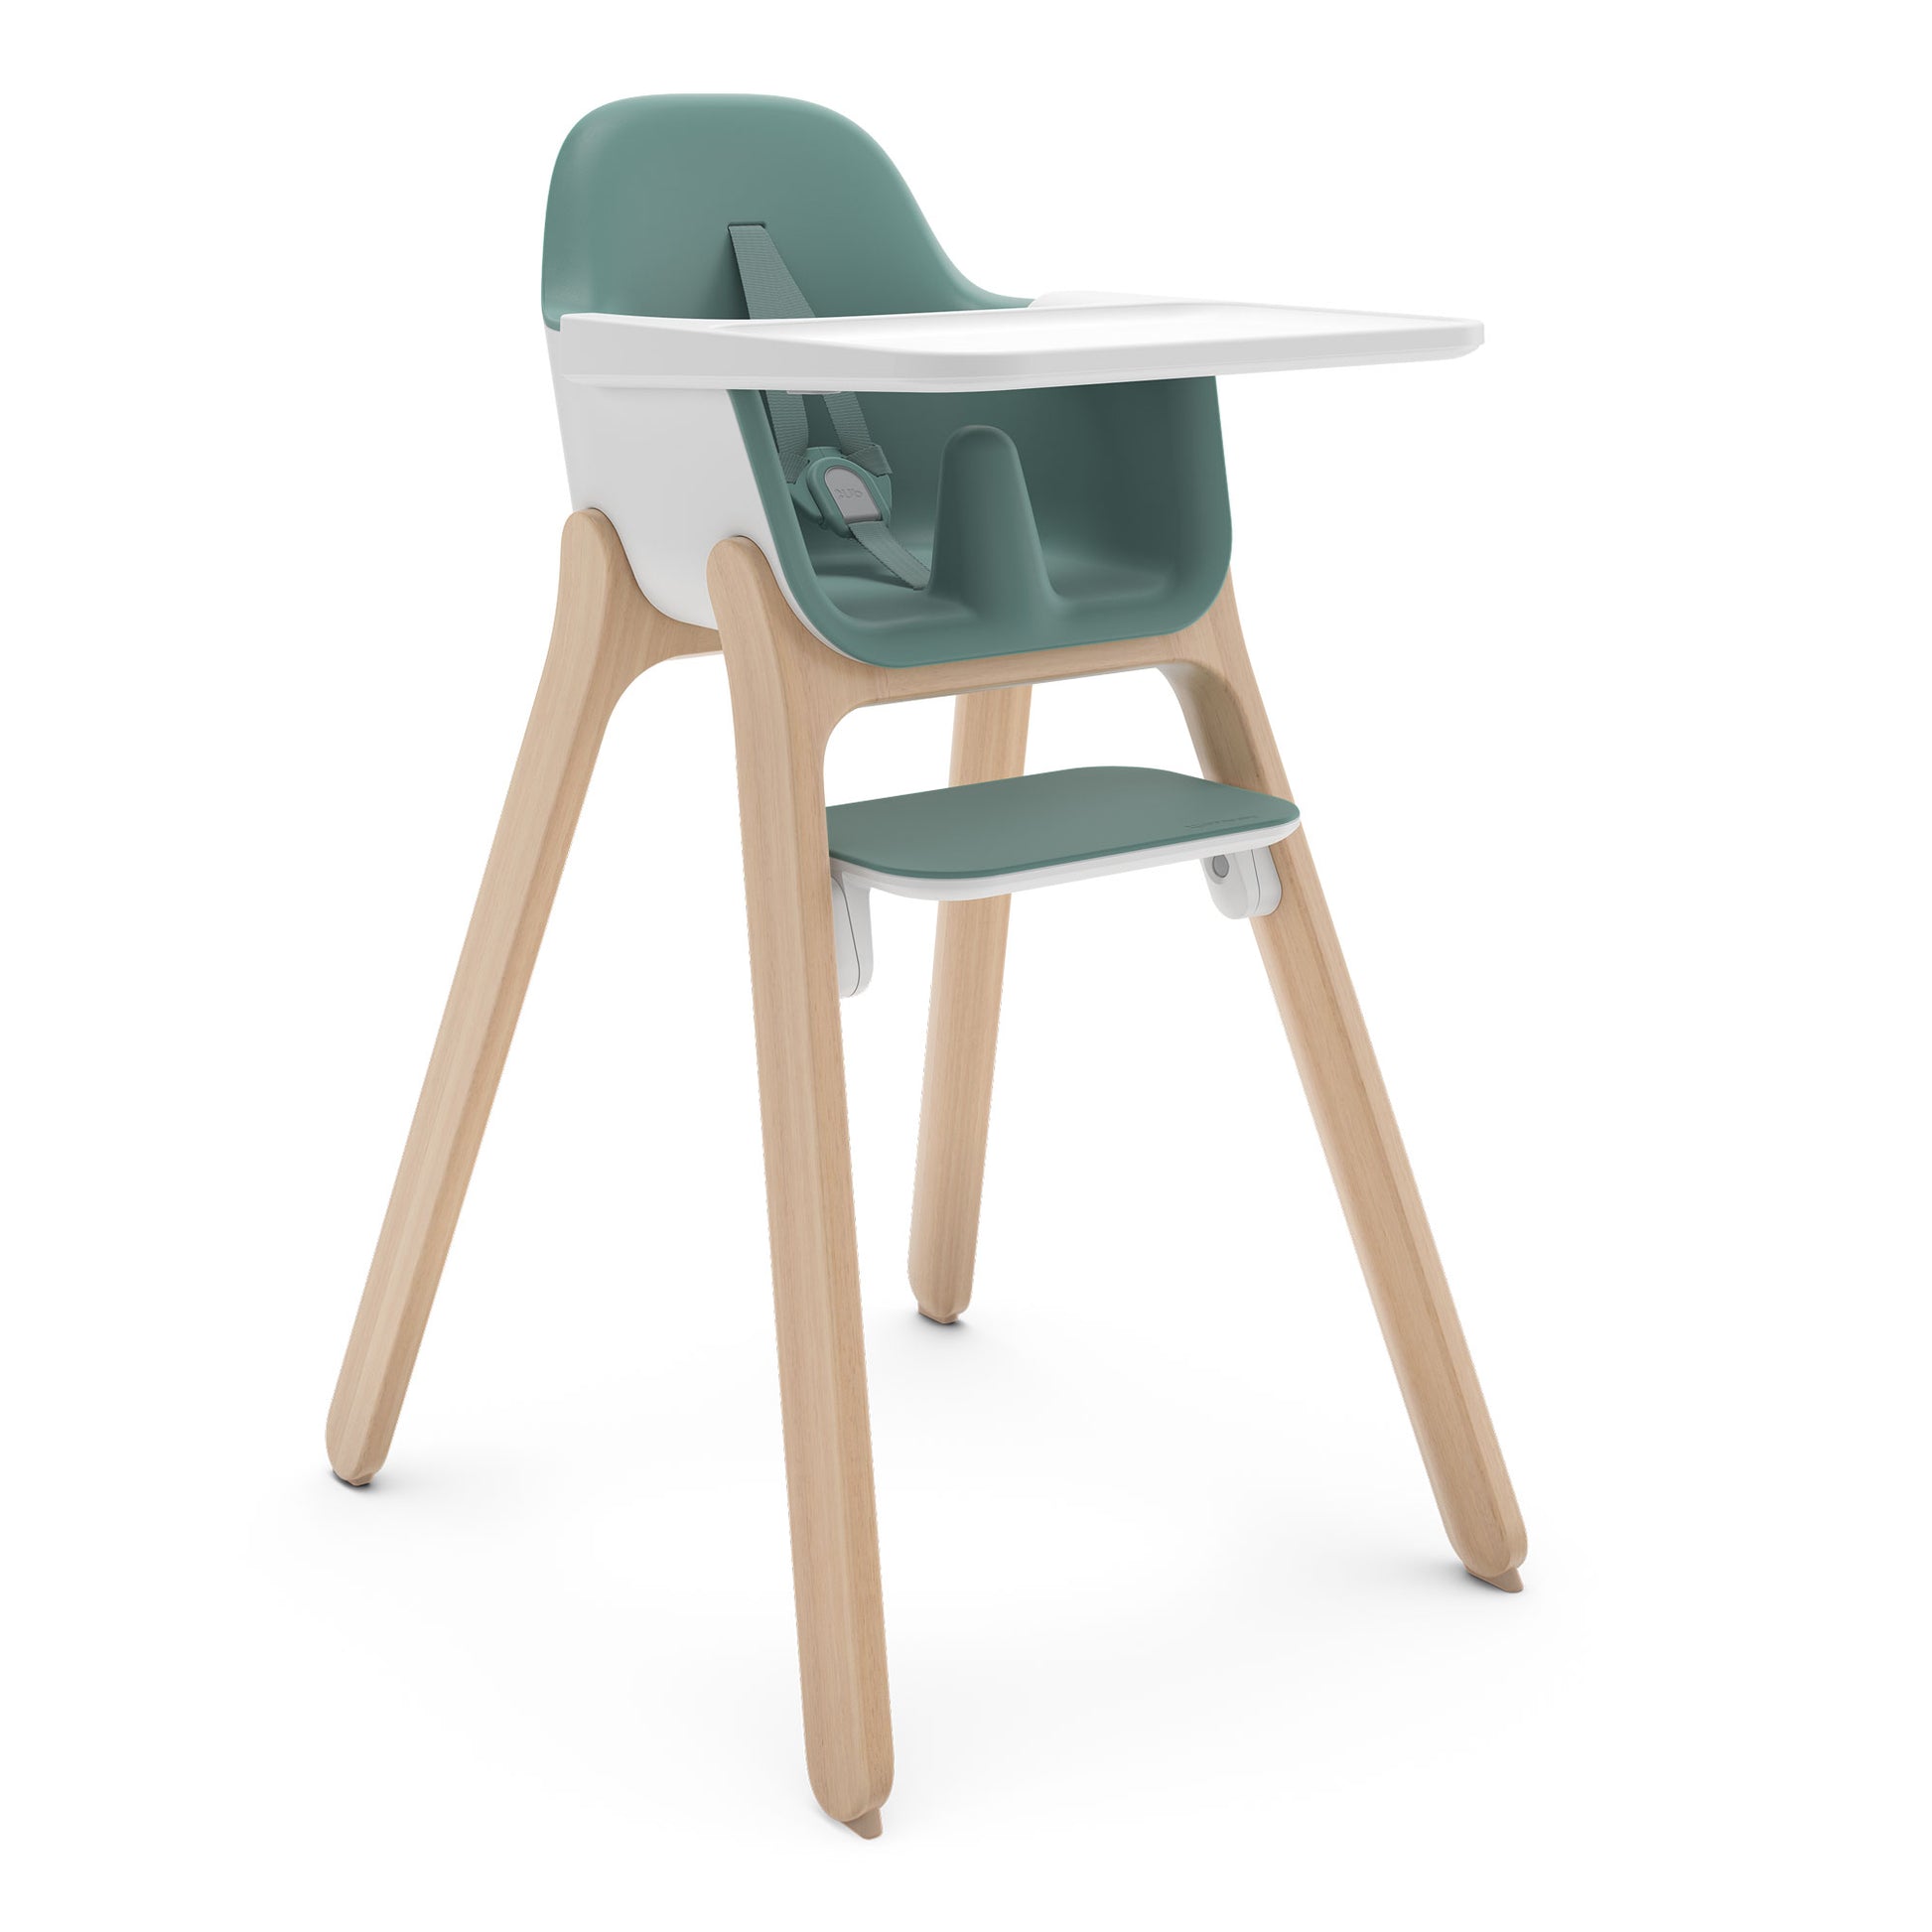 UPPAbaby CIRO High Chair - EMRICK (Spruce Green)